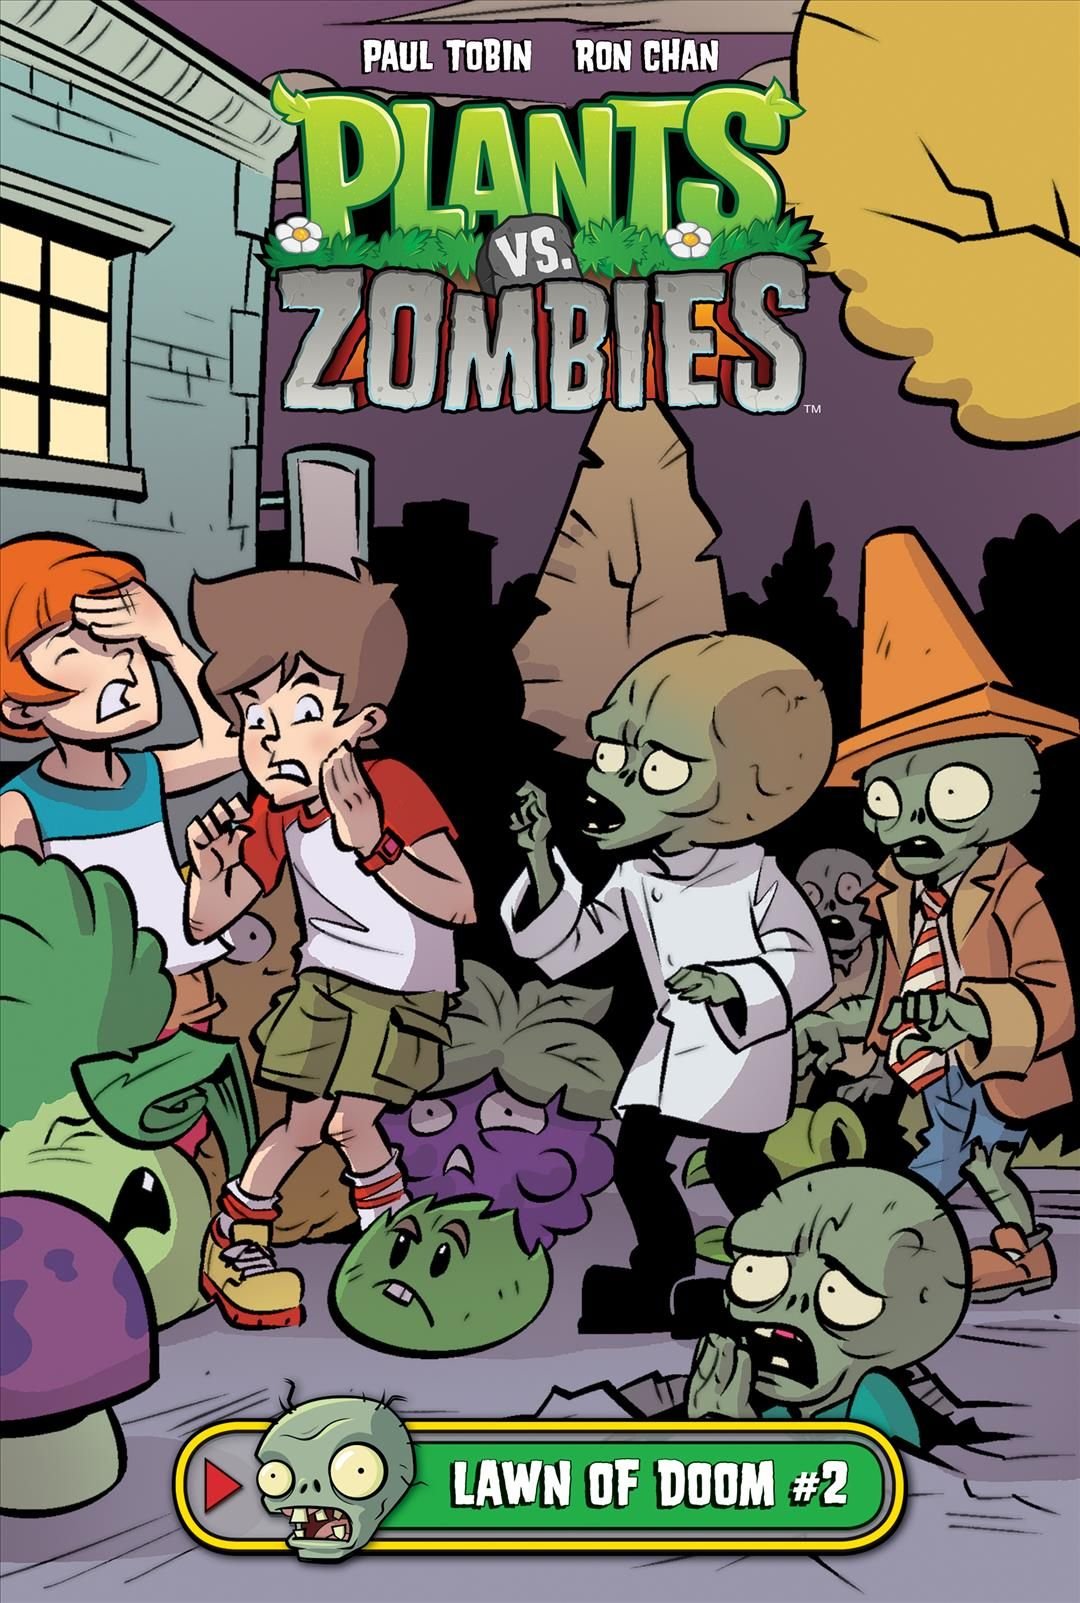 Plants vs. Zombies Volume 18: Constructionary Tales by Paul Tobin